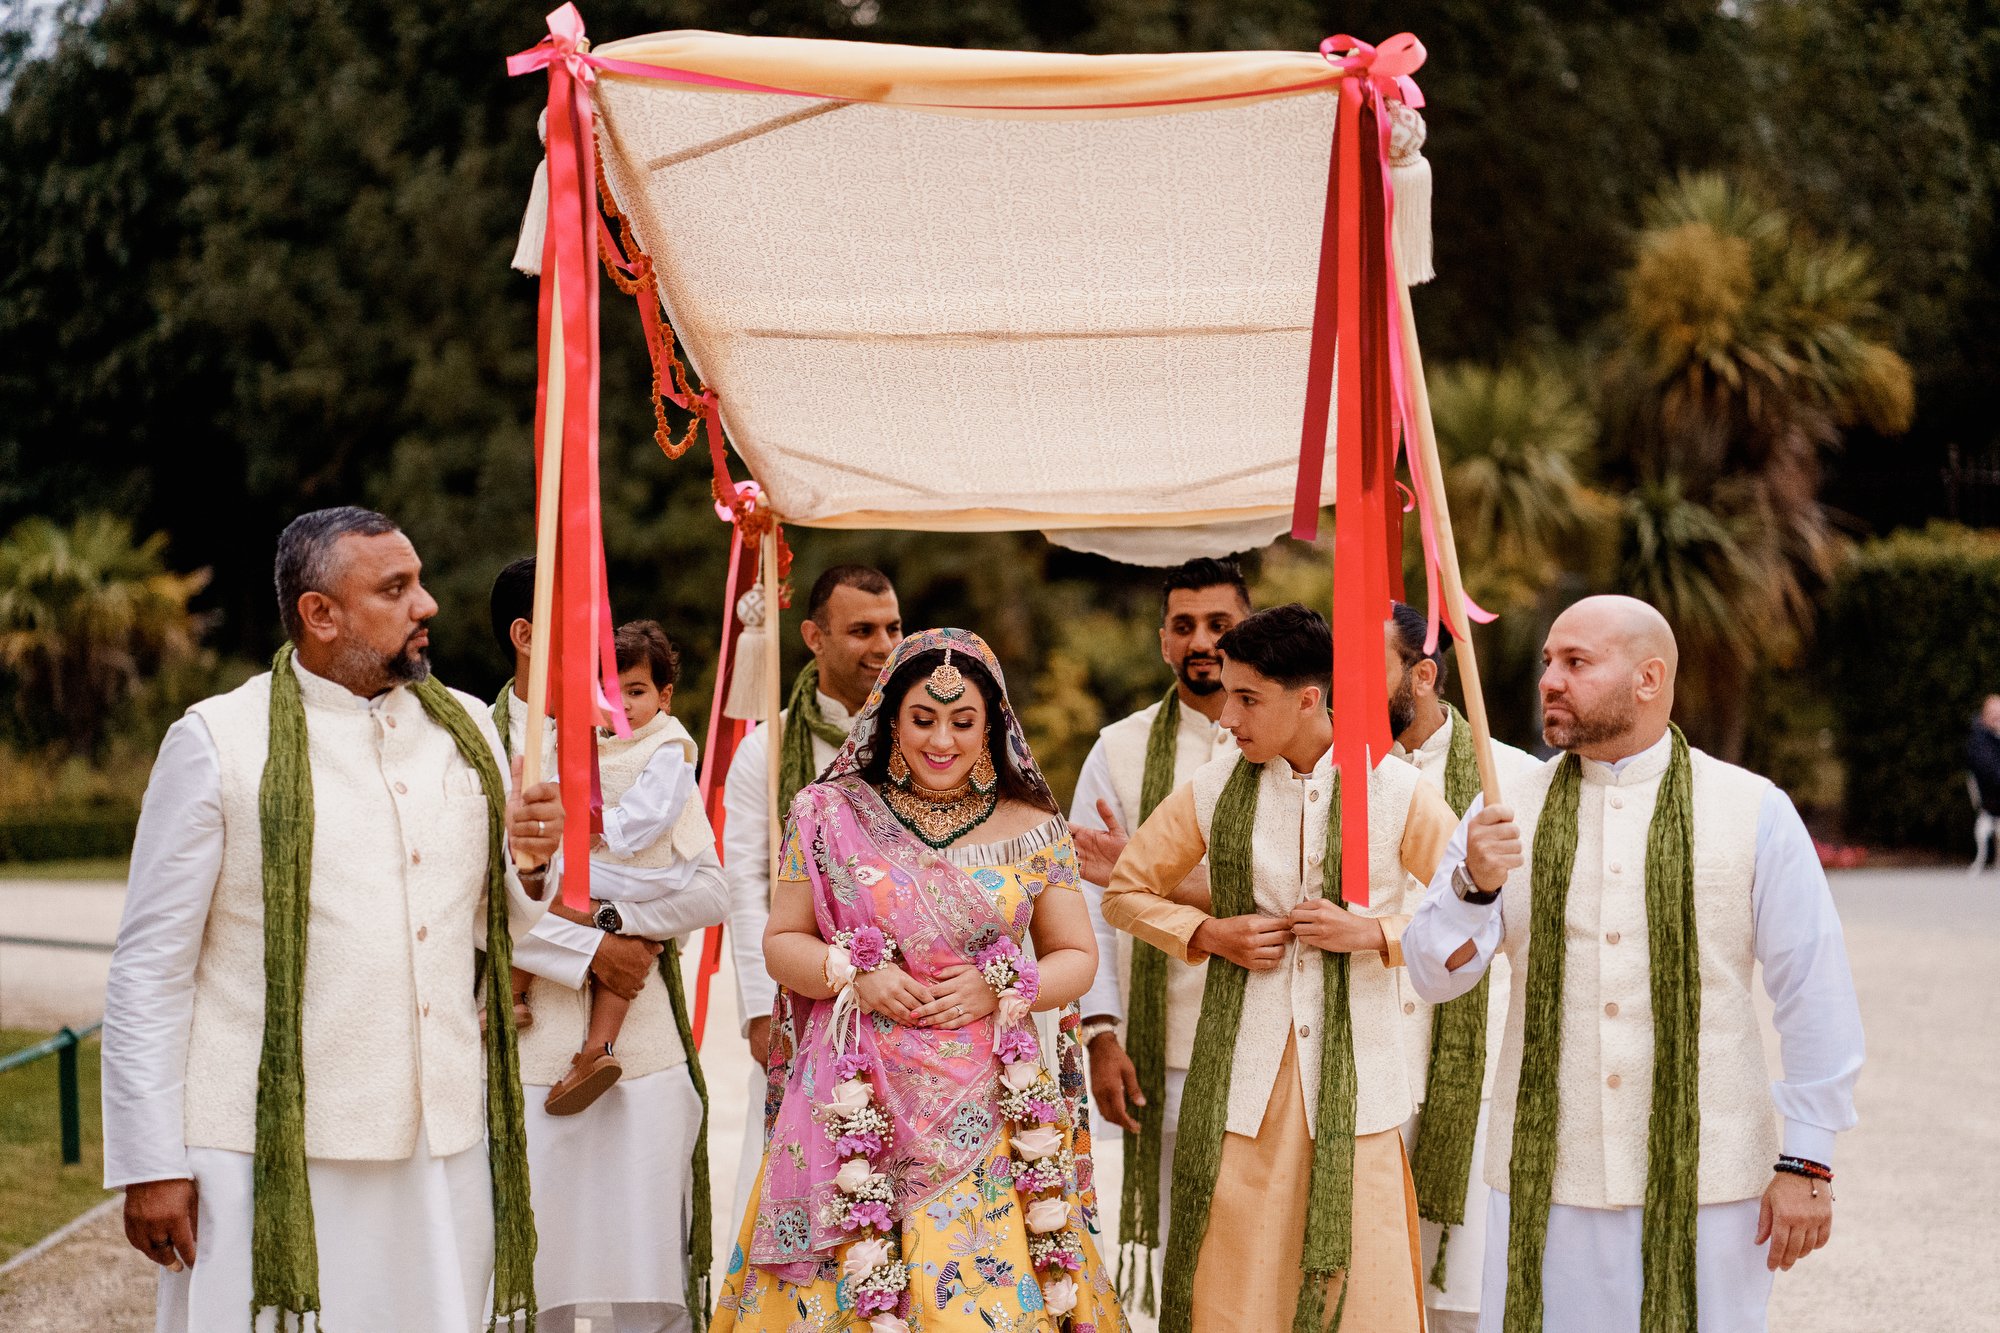 Sefton palm house wedding - indian wedding sangeet uk by arj photography®